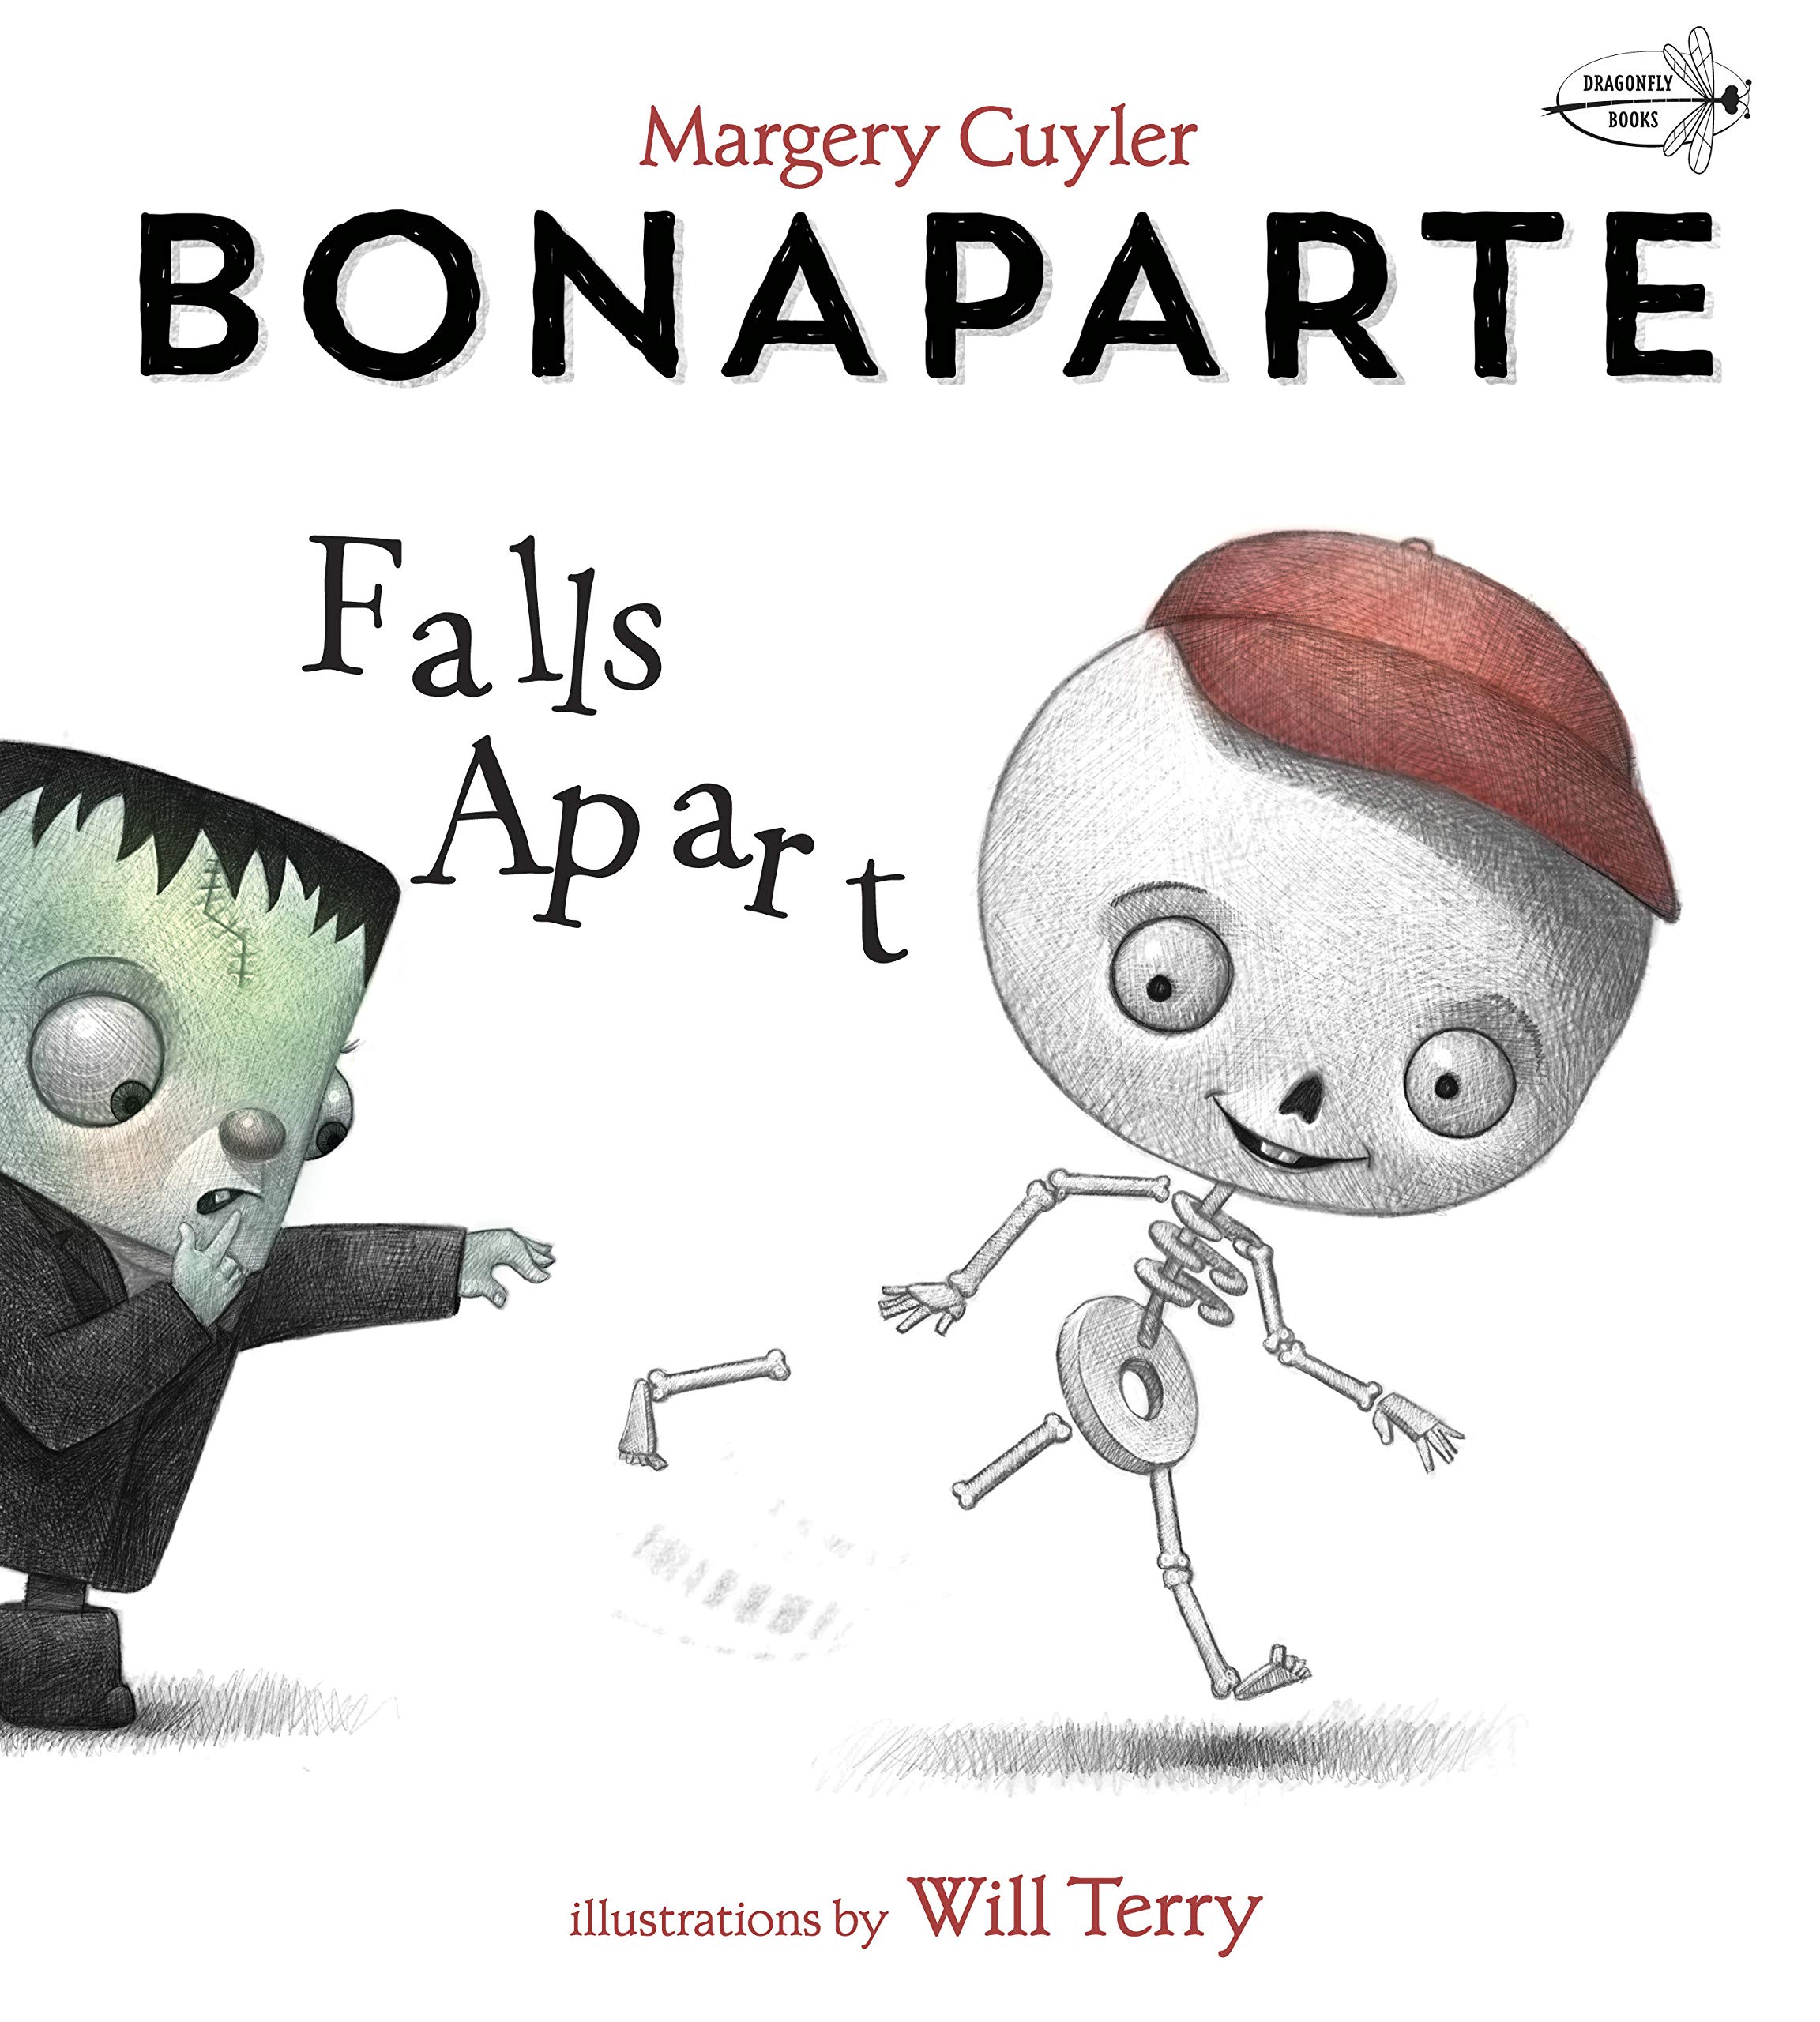 "Bonaparte Falls Apart" by Margery Cuyler